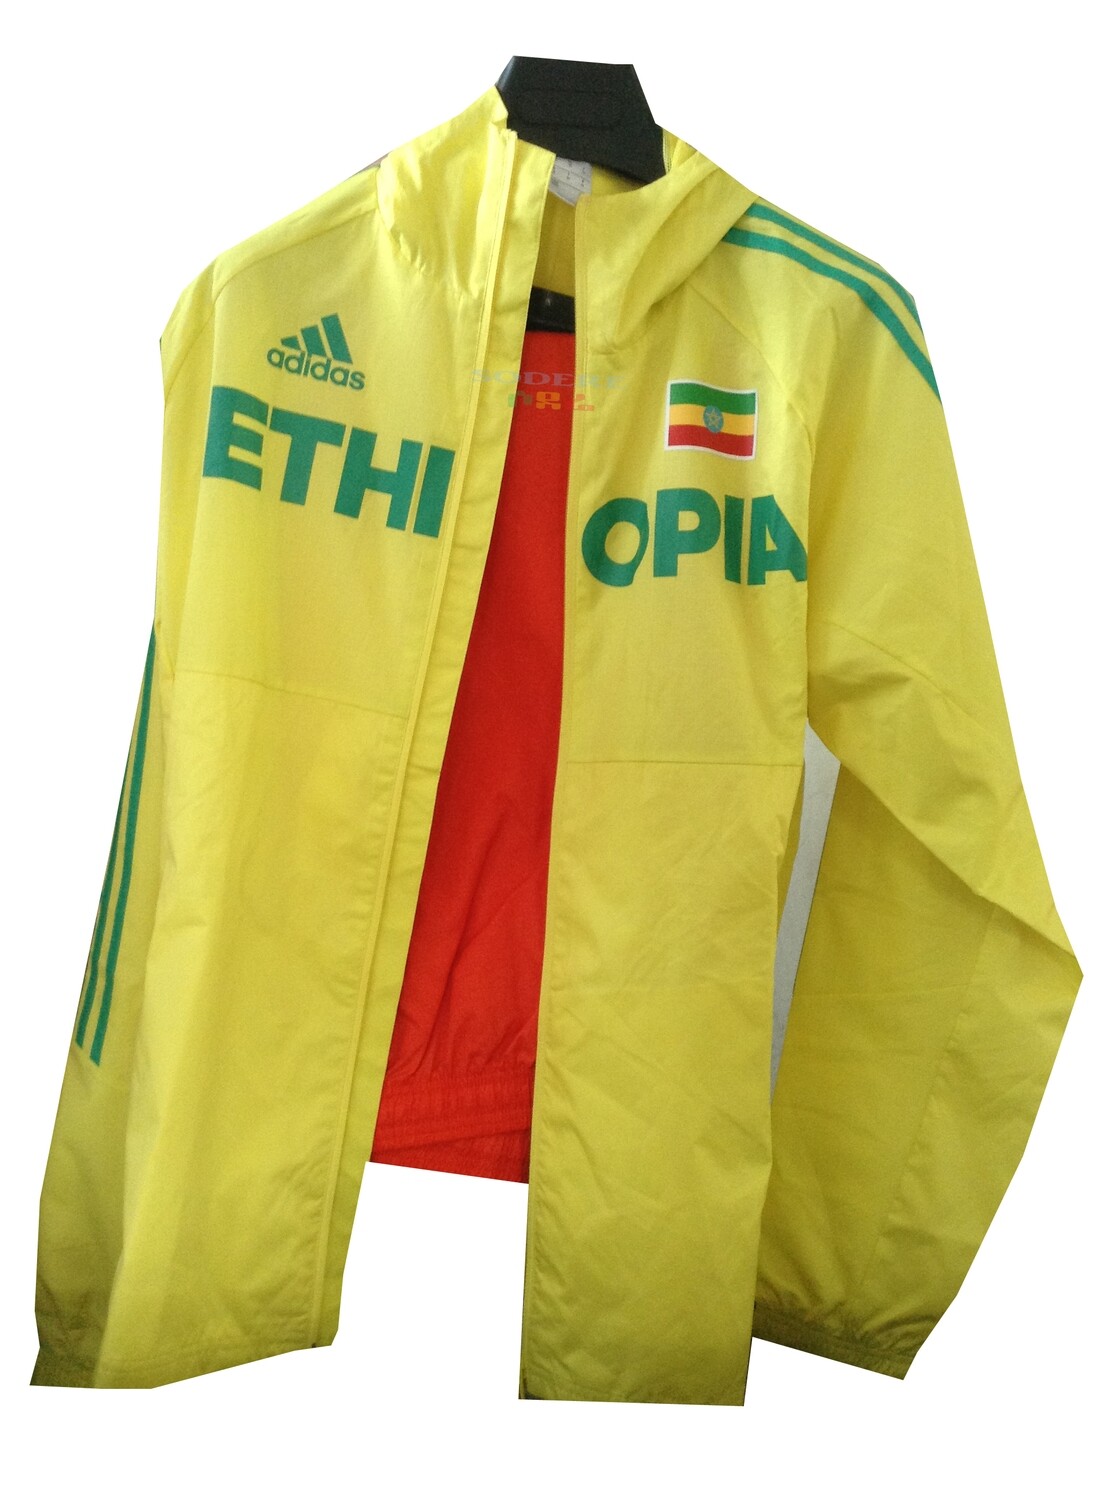 Persona a cargo del juego deportivo Proscrito lino የኢትዮጵያ የስፖርት ቱታ Ethiopian Adidas Sportswear